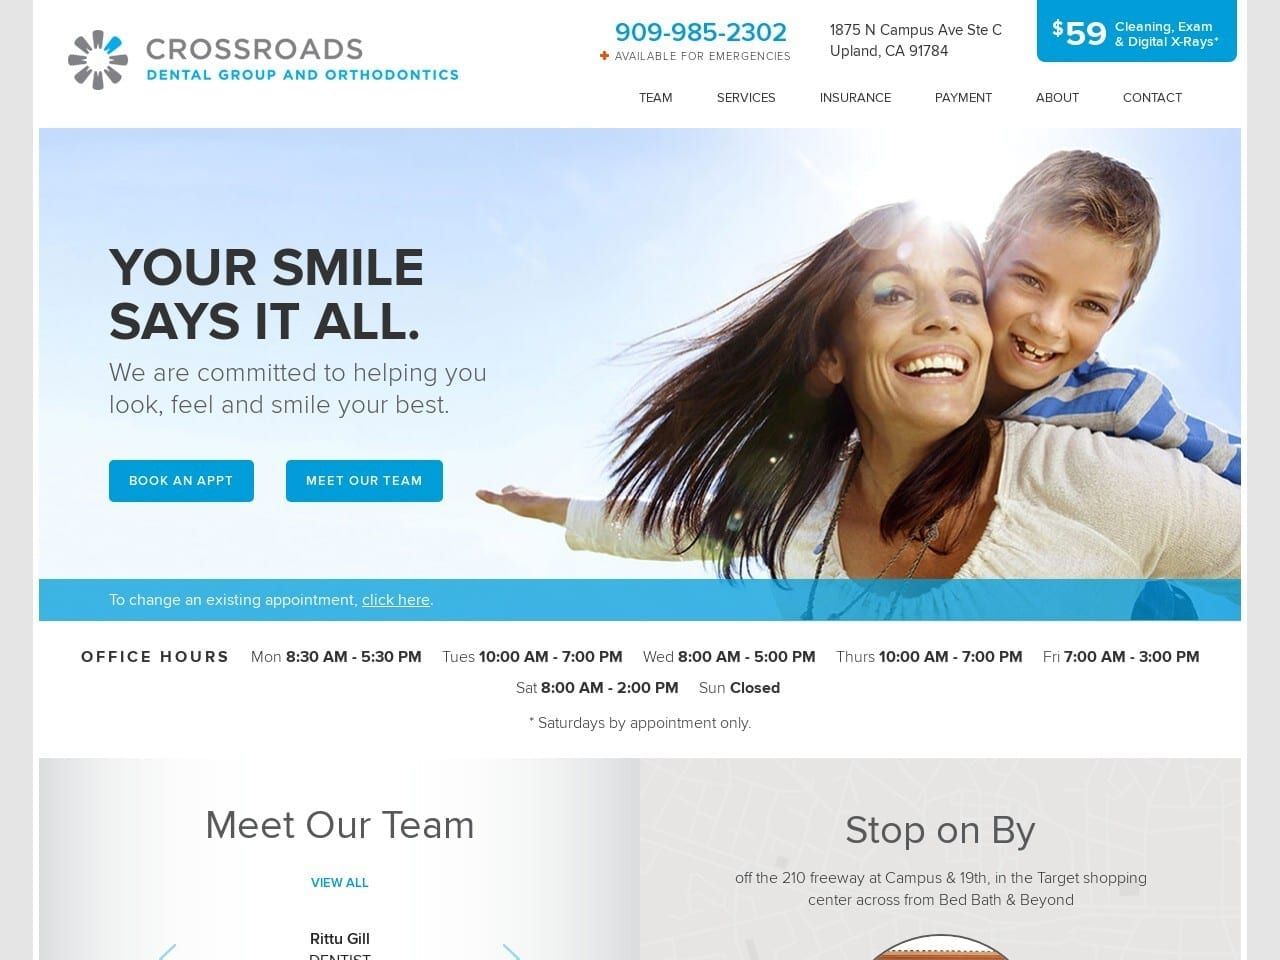 Crossroads Dental Group and Orthodontics Website Screenshot from crossroadsdentalgroup.com